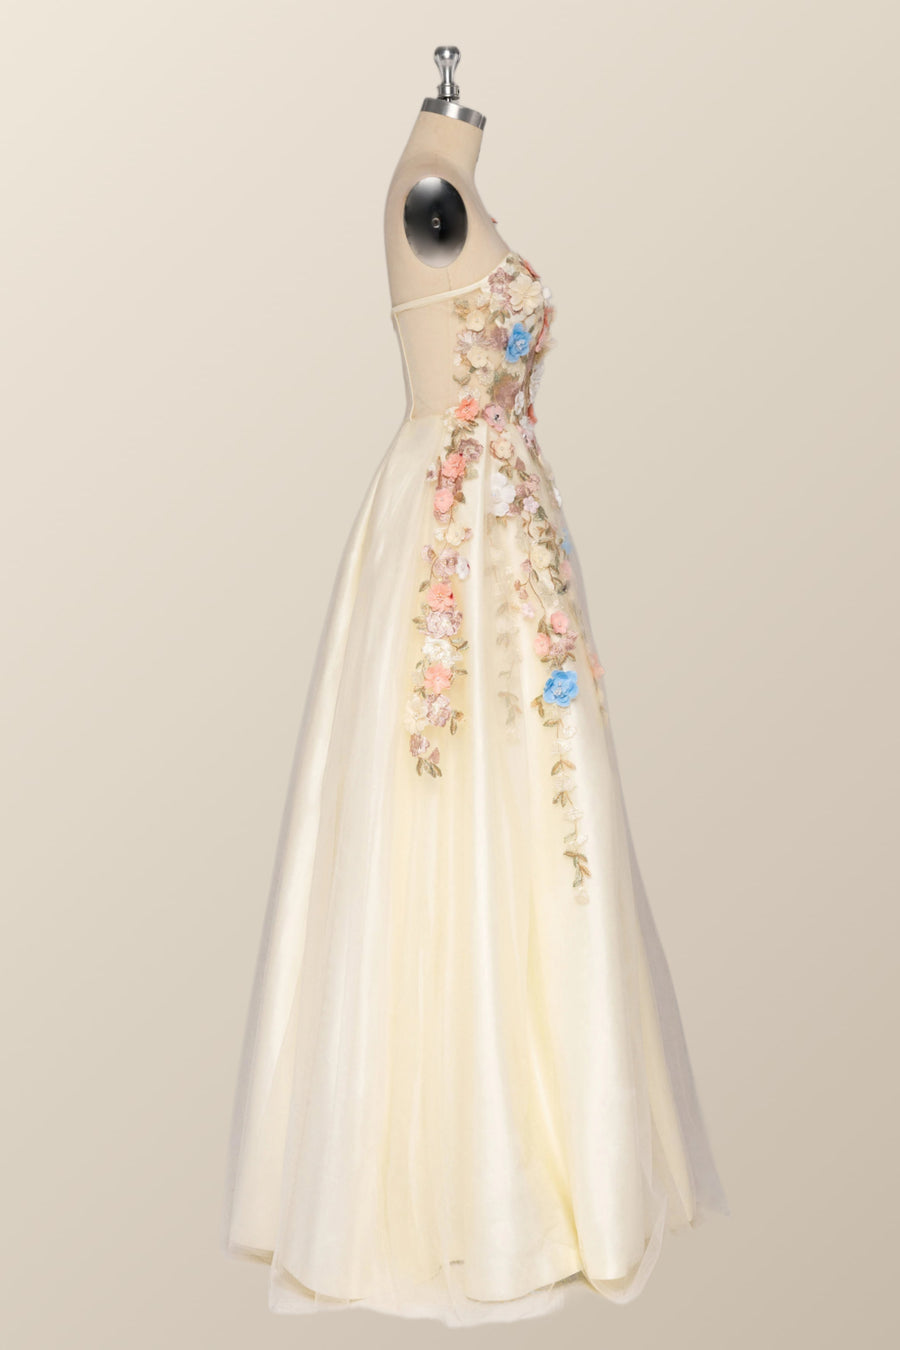 One Shoulder Champagne Floral Long Prom Dress